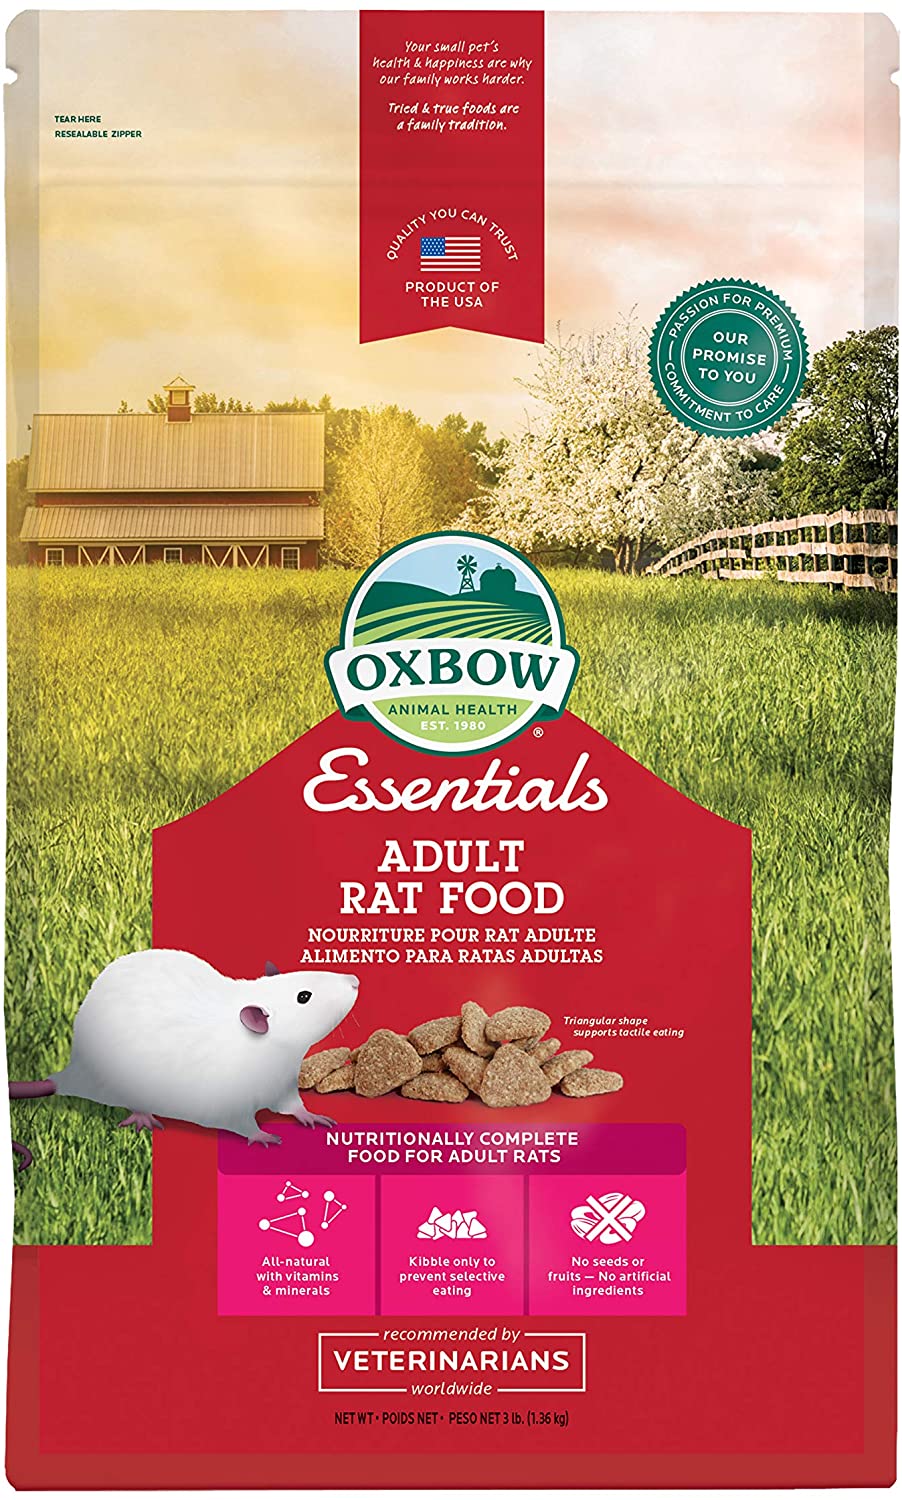 Oxbow Essentials Adult Rat Food Bag